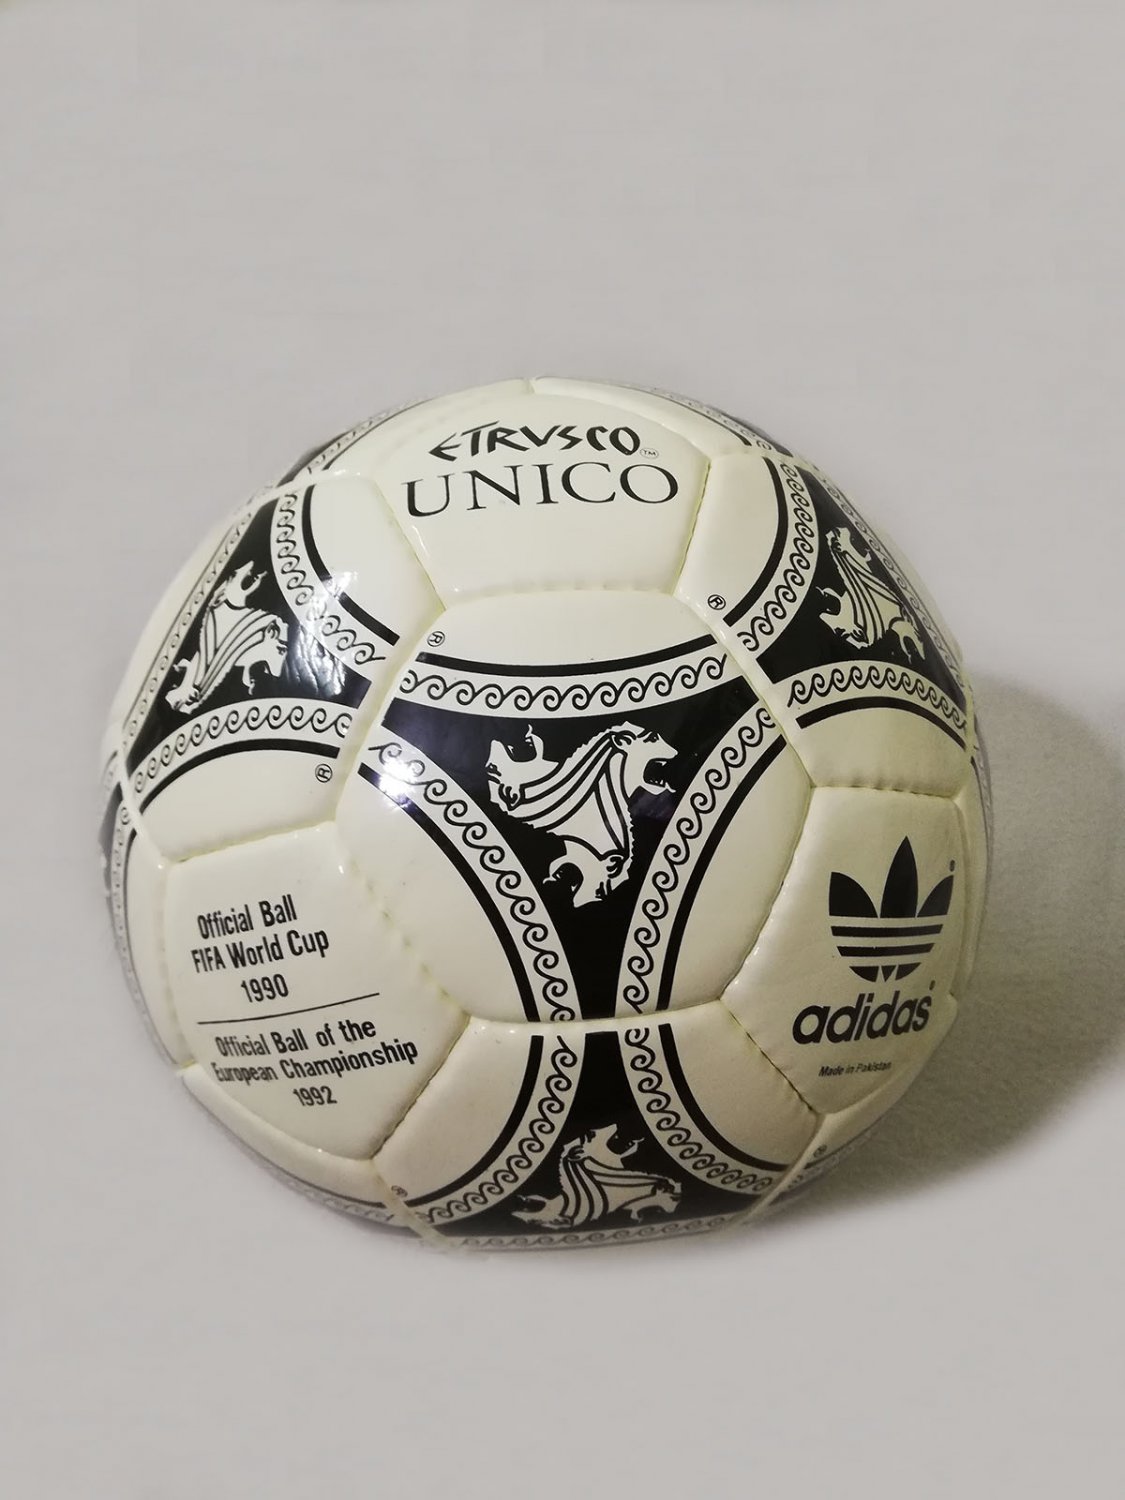 Adidas Etrusco Unico Football | FIFA Soccer | Official Match Ball W/C 1990/1992